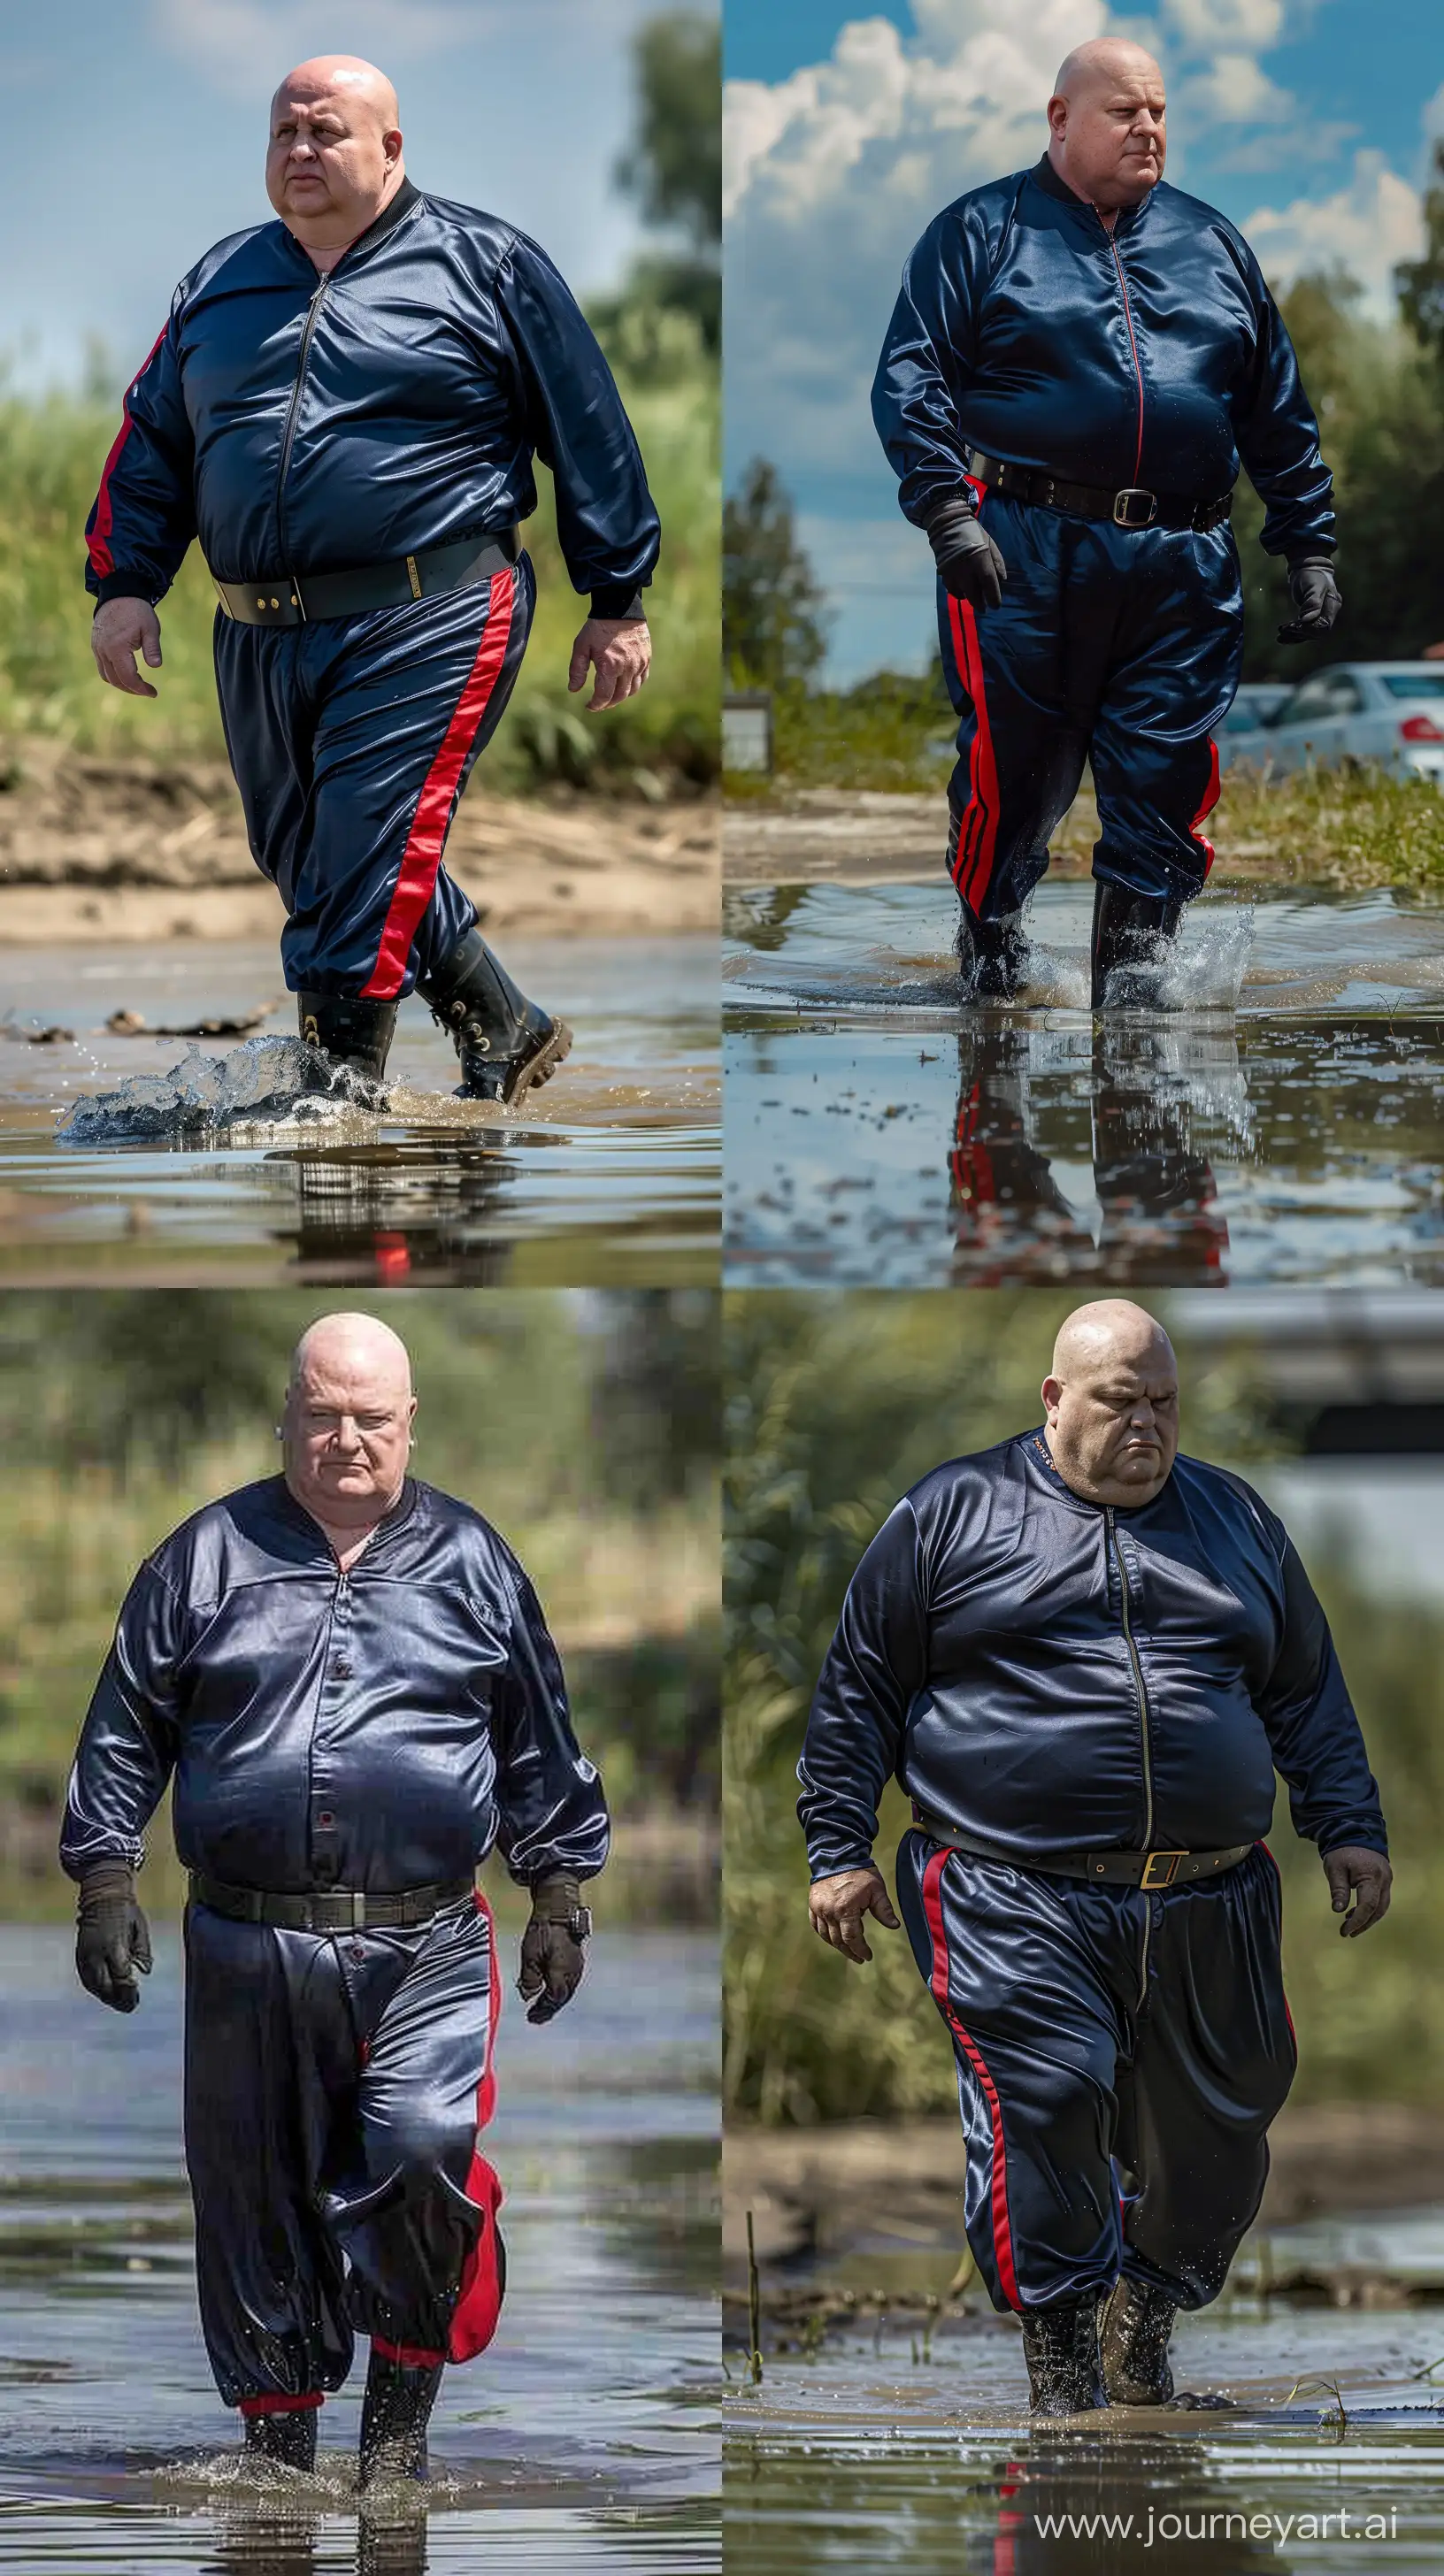 Elderly-Man-in-Stylish-Navy-Royal-Tracksuit-Striding-through-Summer-Water